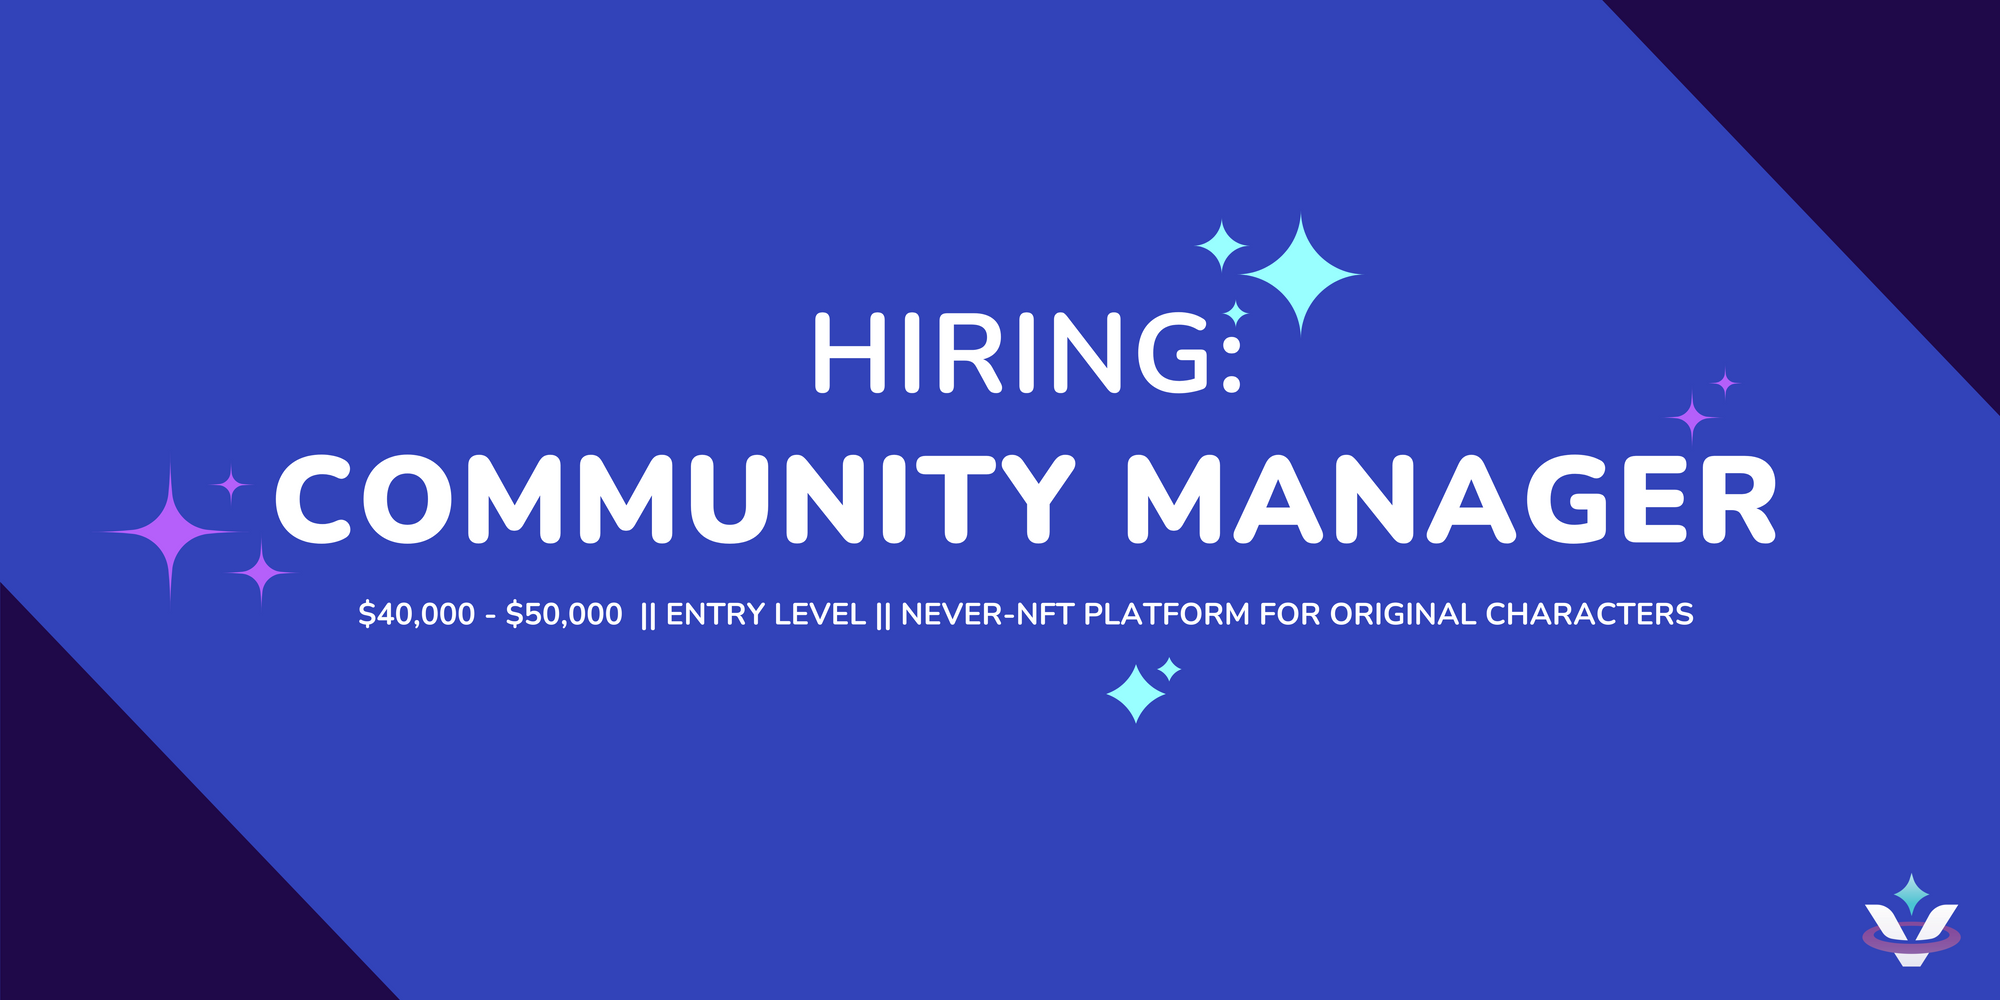 Hiring: Community Manager, $40,000-$50,000, Entry-level, Never-NFT platform for original characters